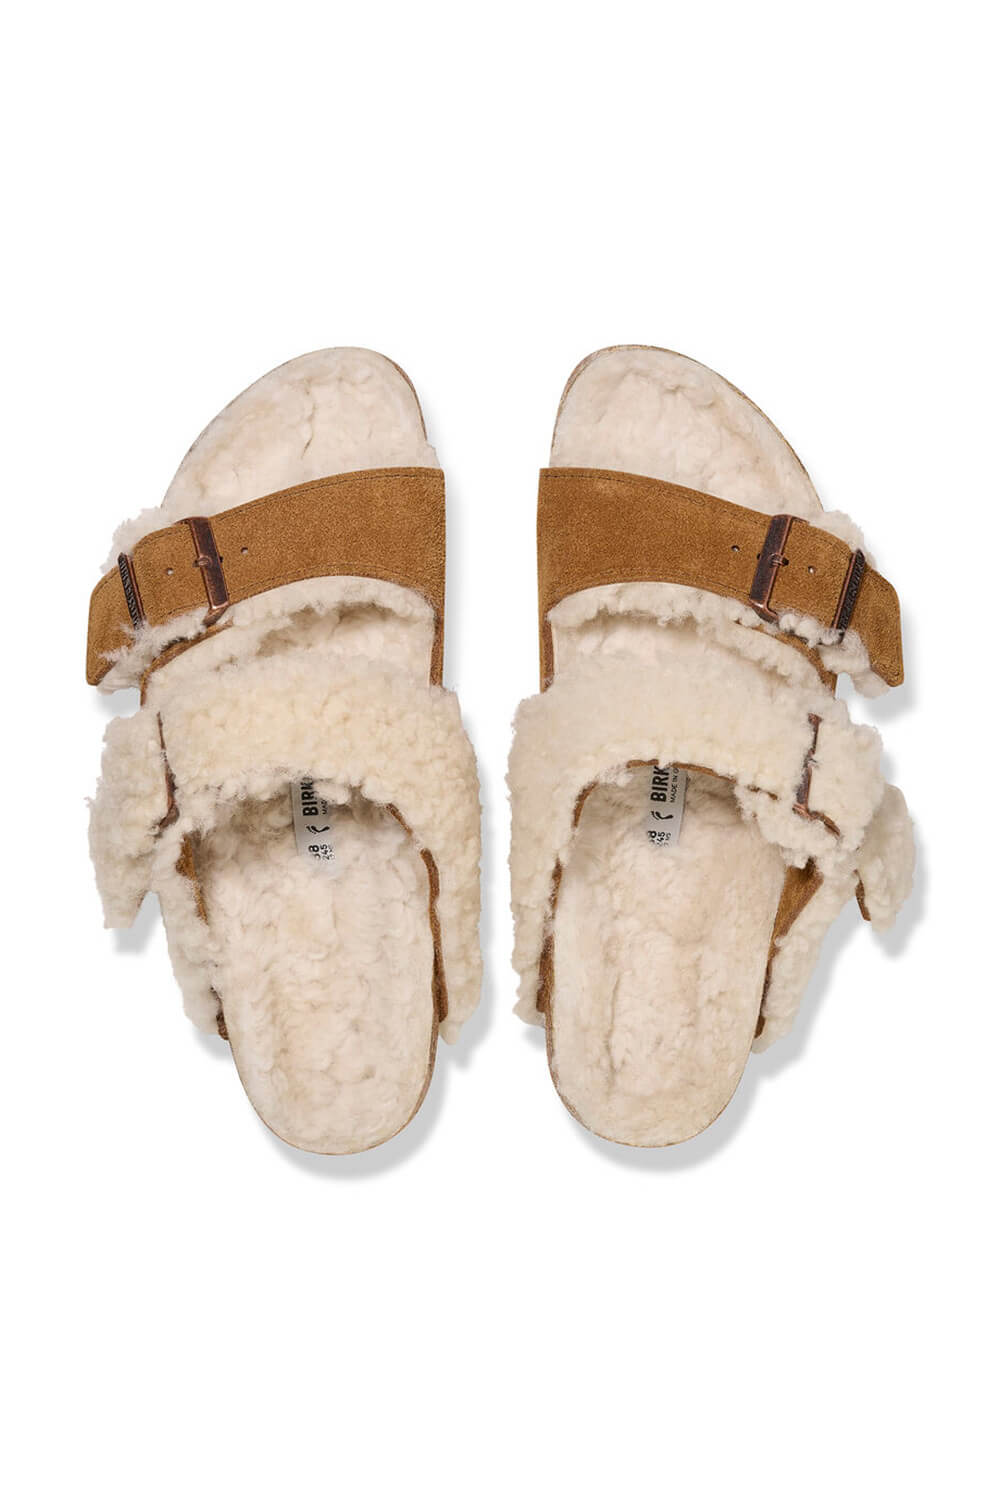 Birkenstock Arizona Teddy Split Leather Shearling Sandals